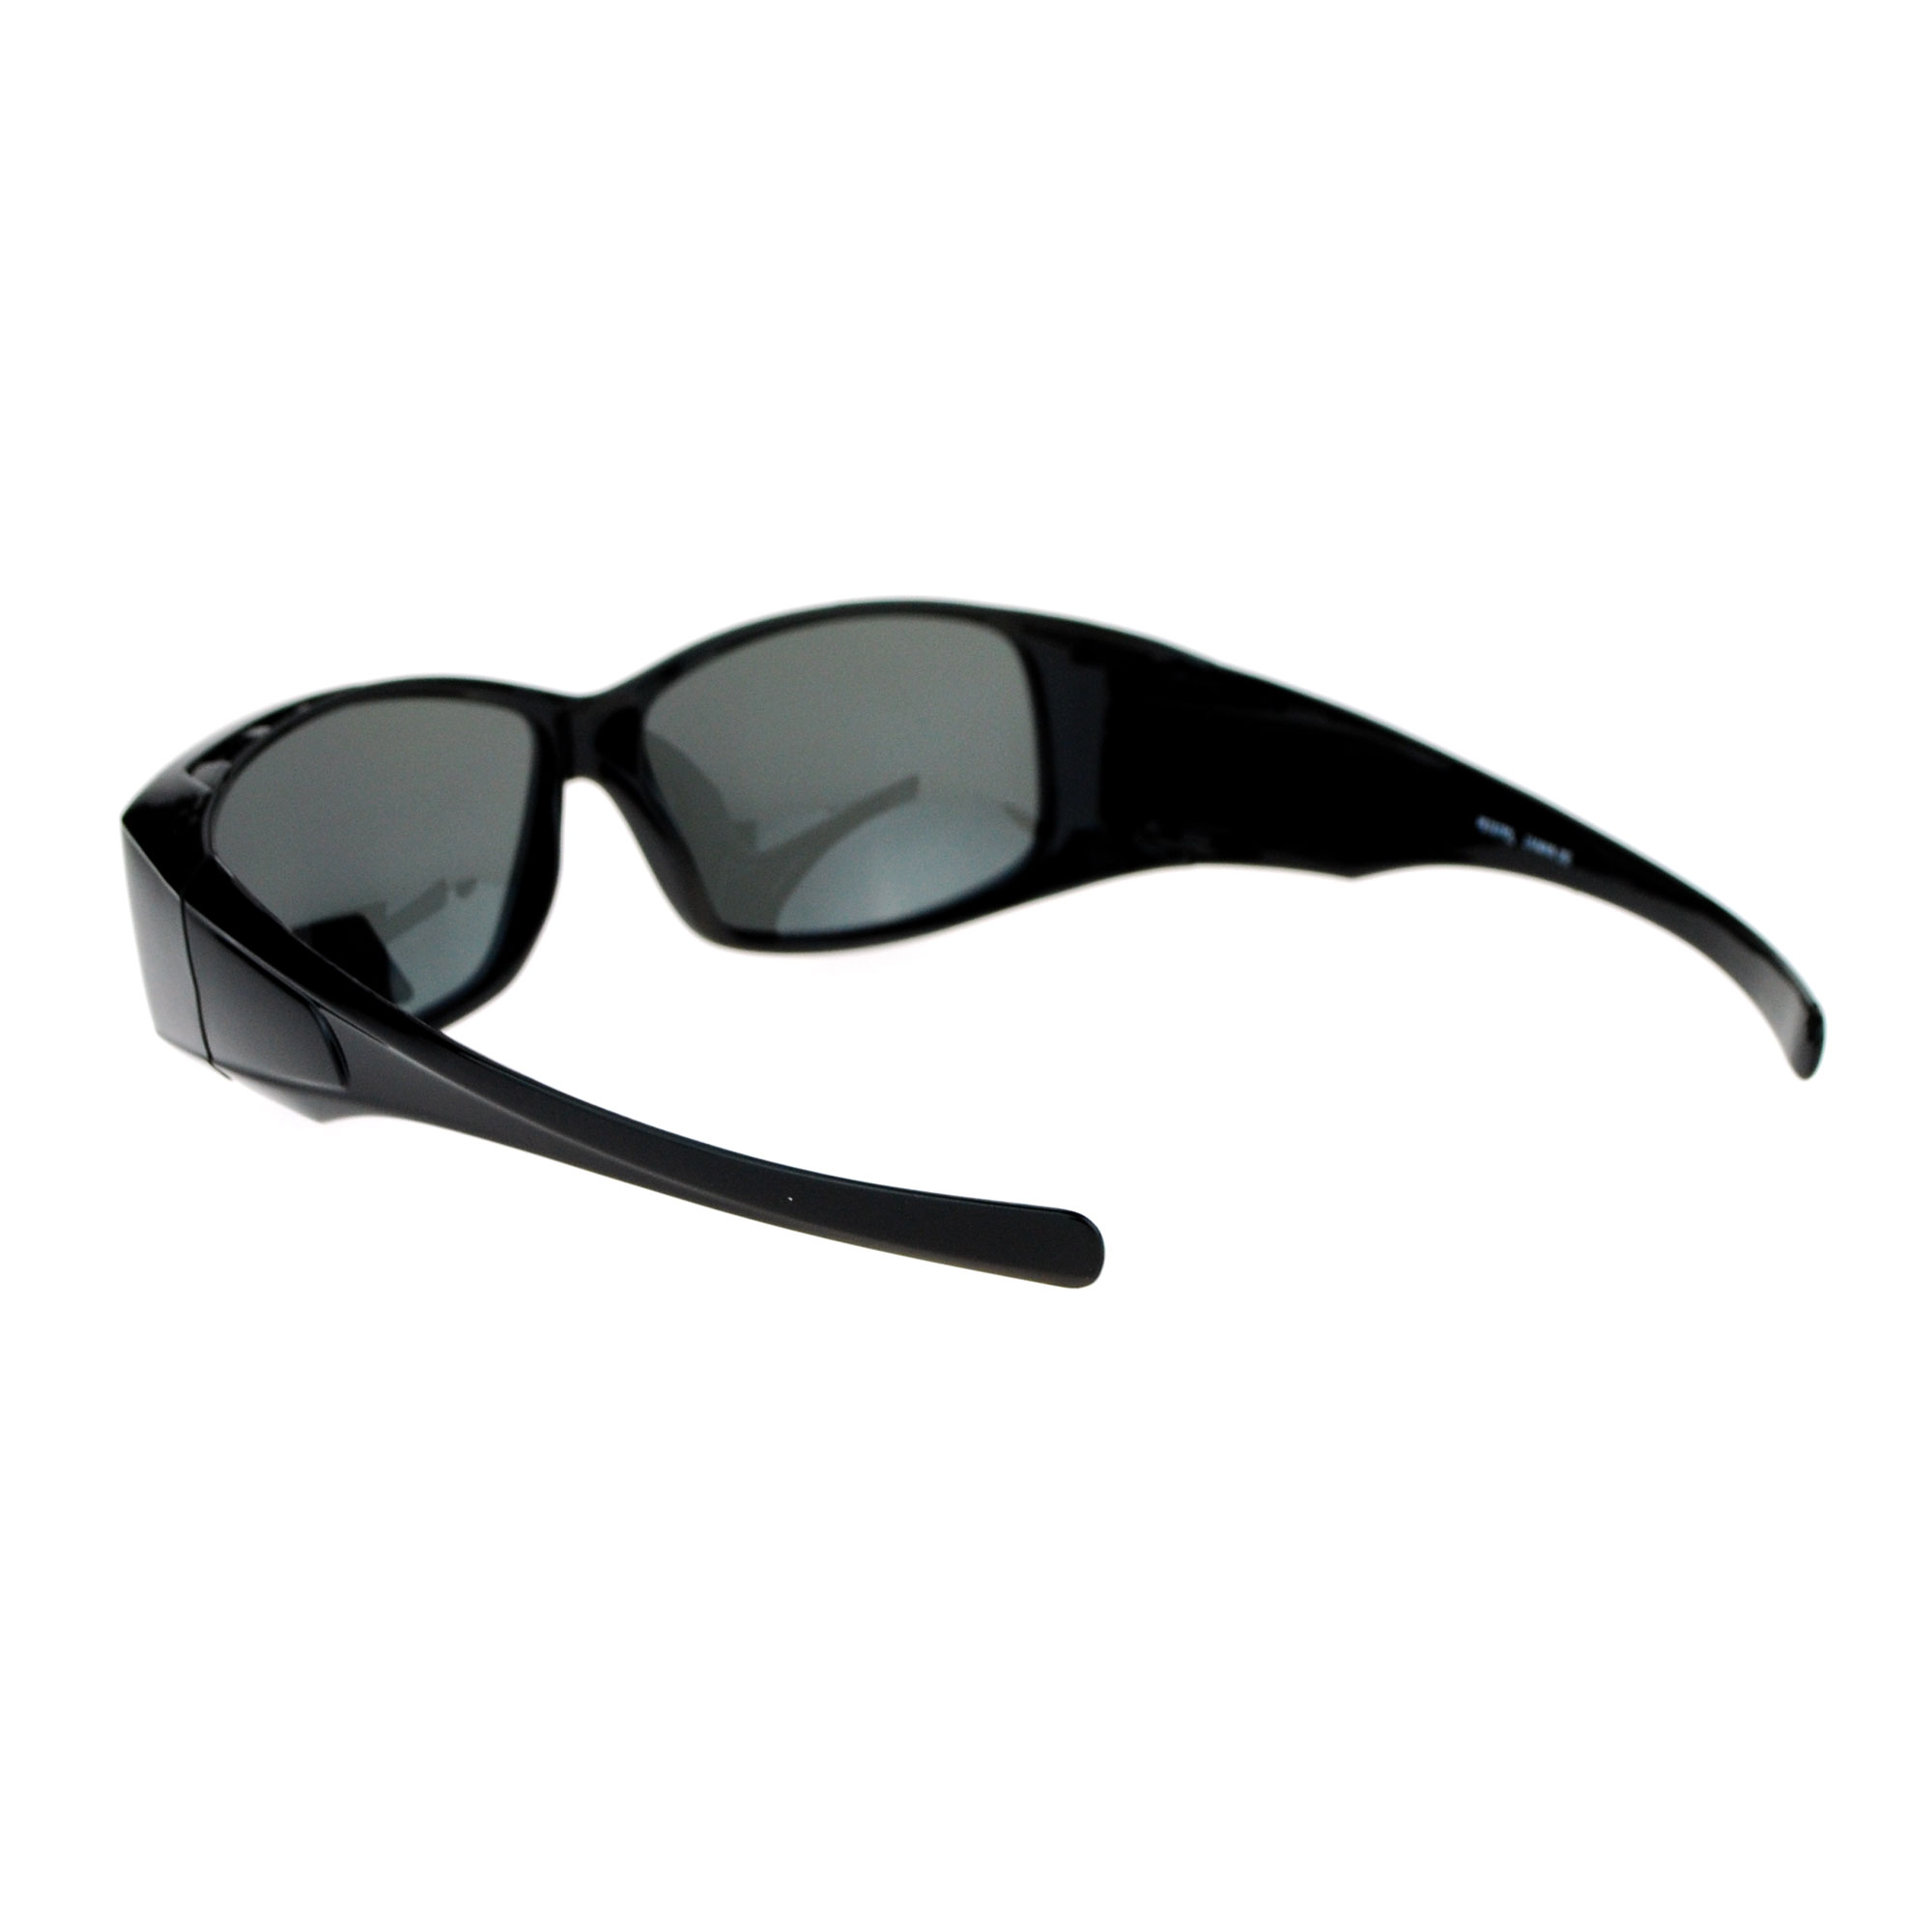 SA106 Fit Over Glasses Anti-glare Polarized Rectangular Sunglasses | eBay